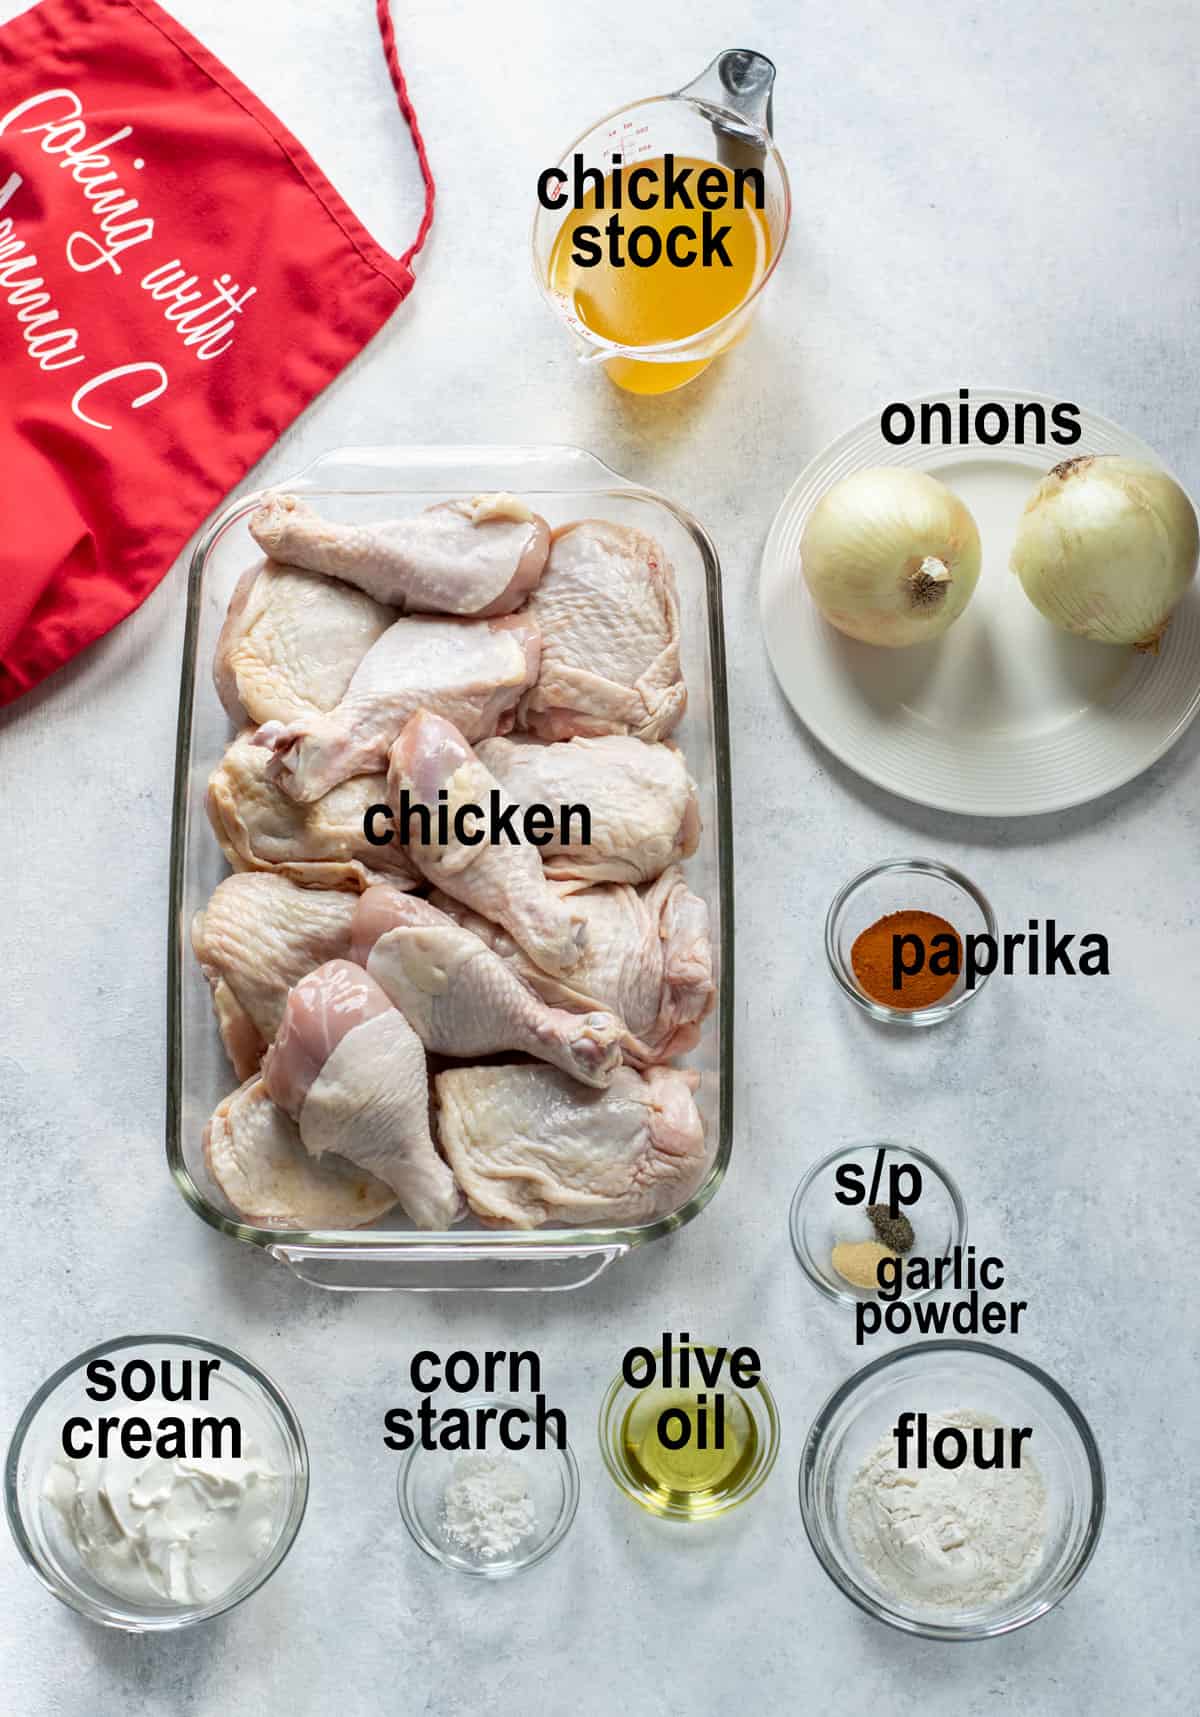 raw chicken, stock, onions seasonings, sour cream, oil, flour